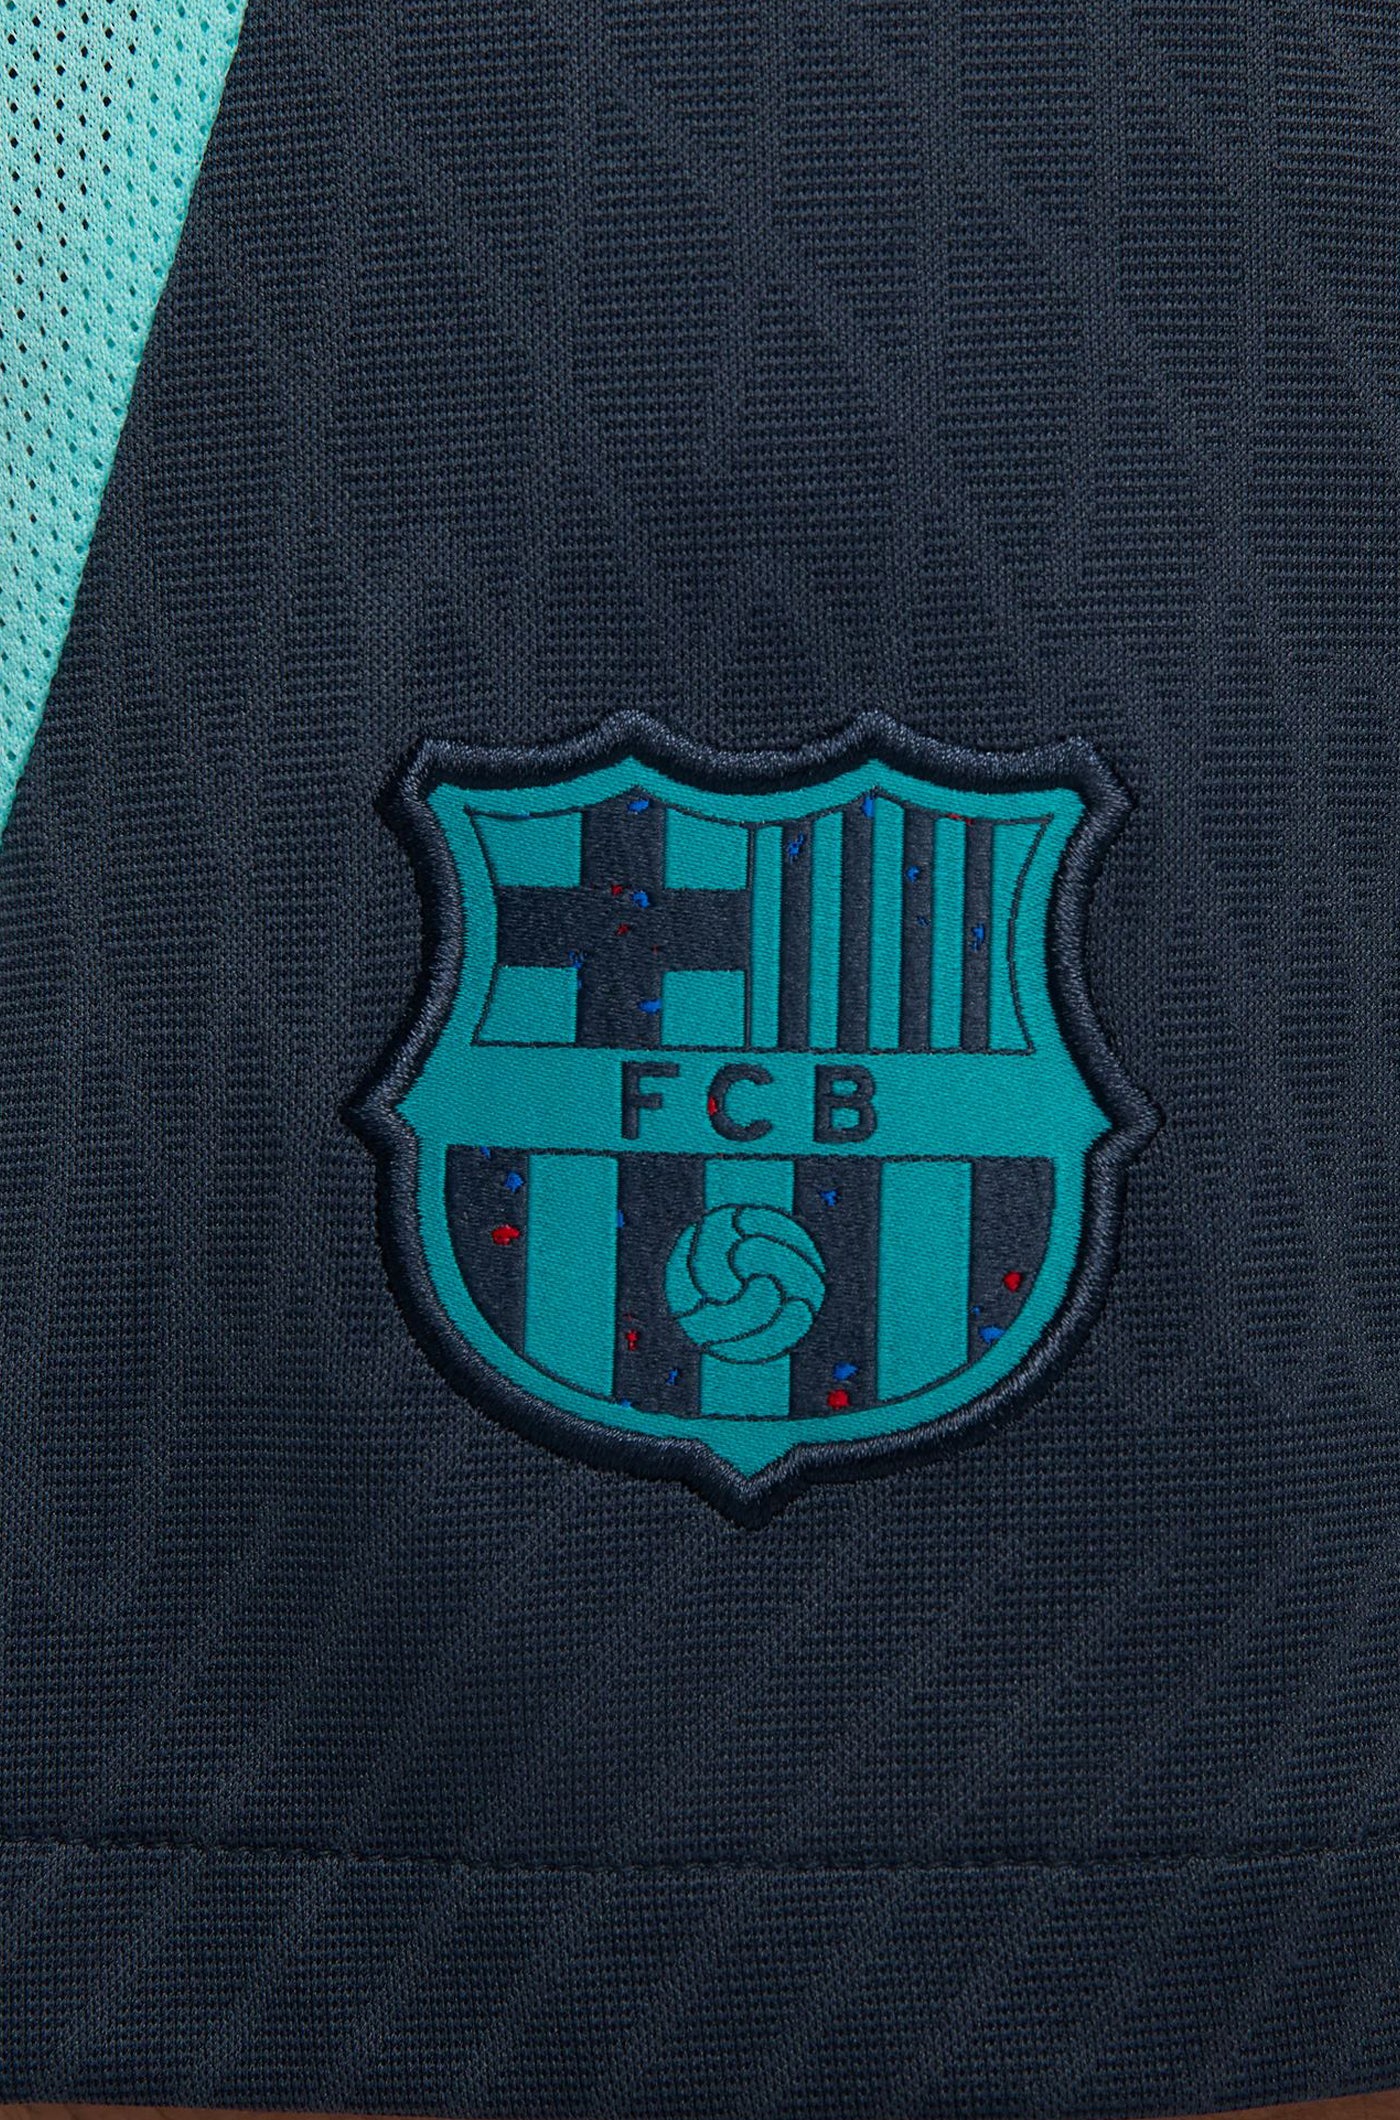 Pantalons curts entrenament FC Barcelona 22/23